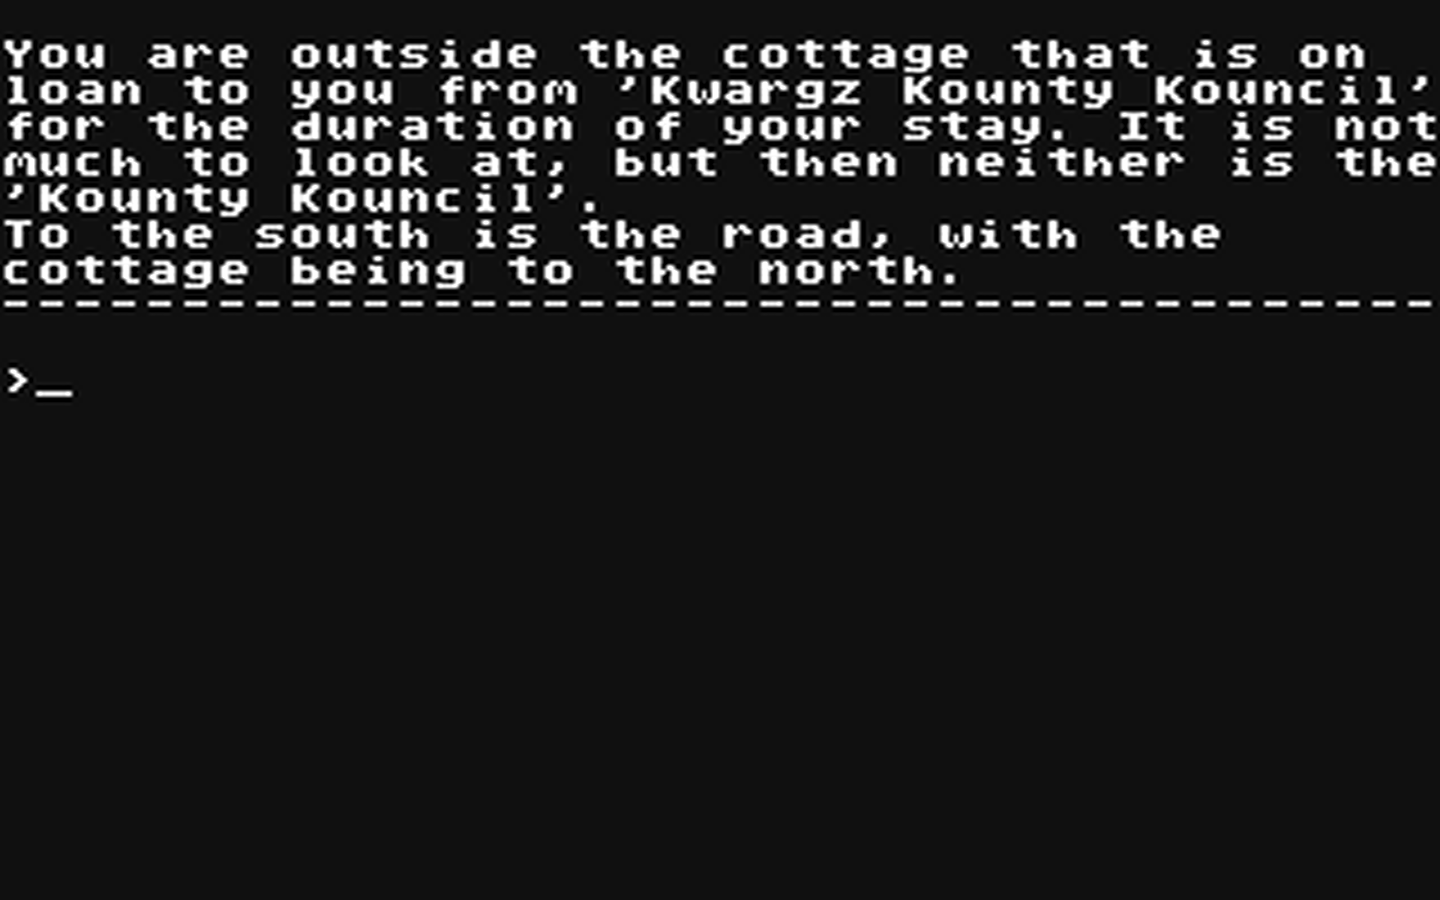 C64 GameBase Search_for_the_Nether_Regions,_The Zenobi_Software 2019